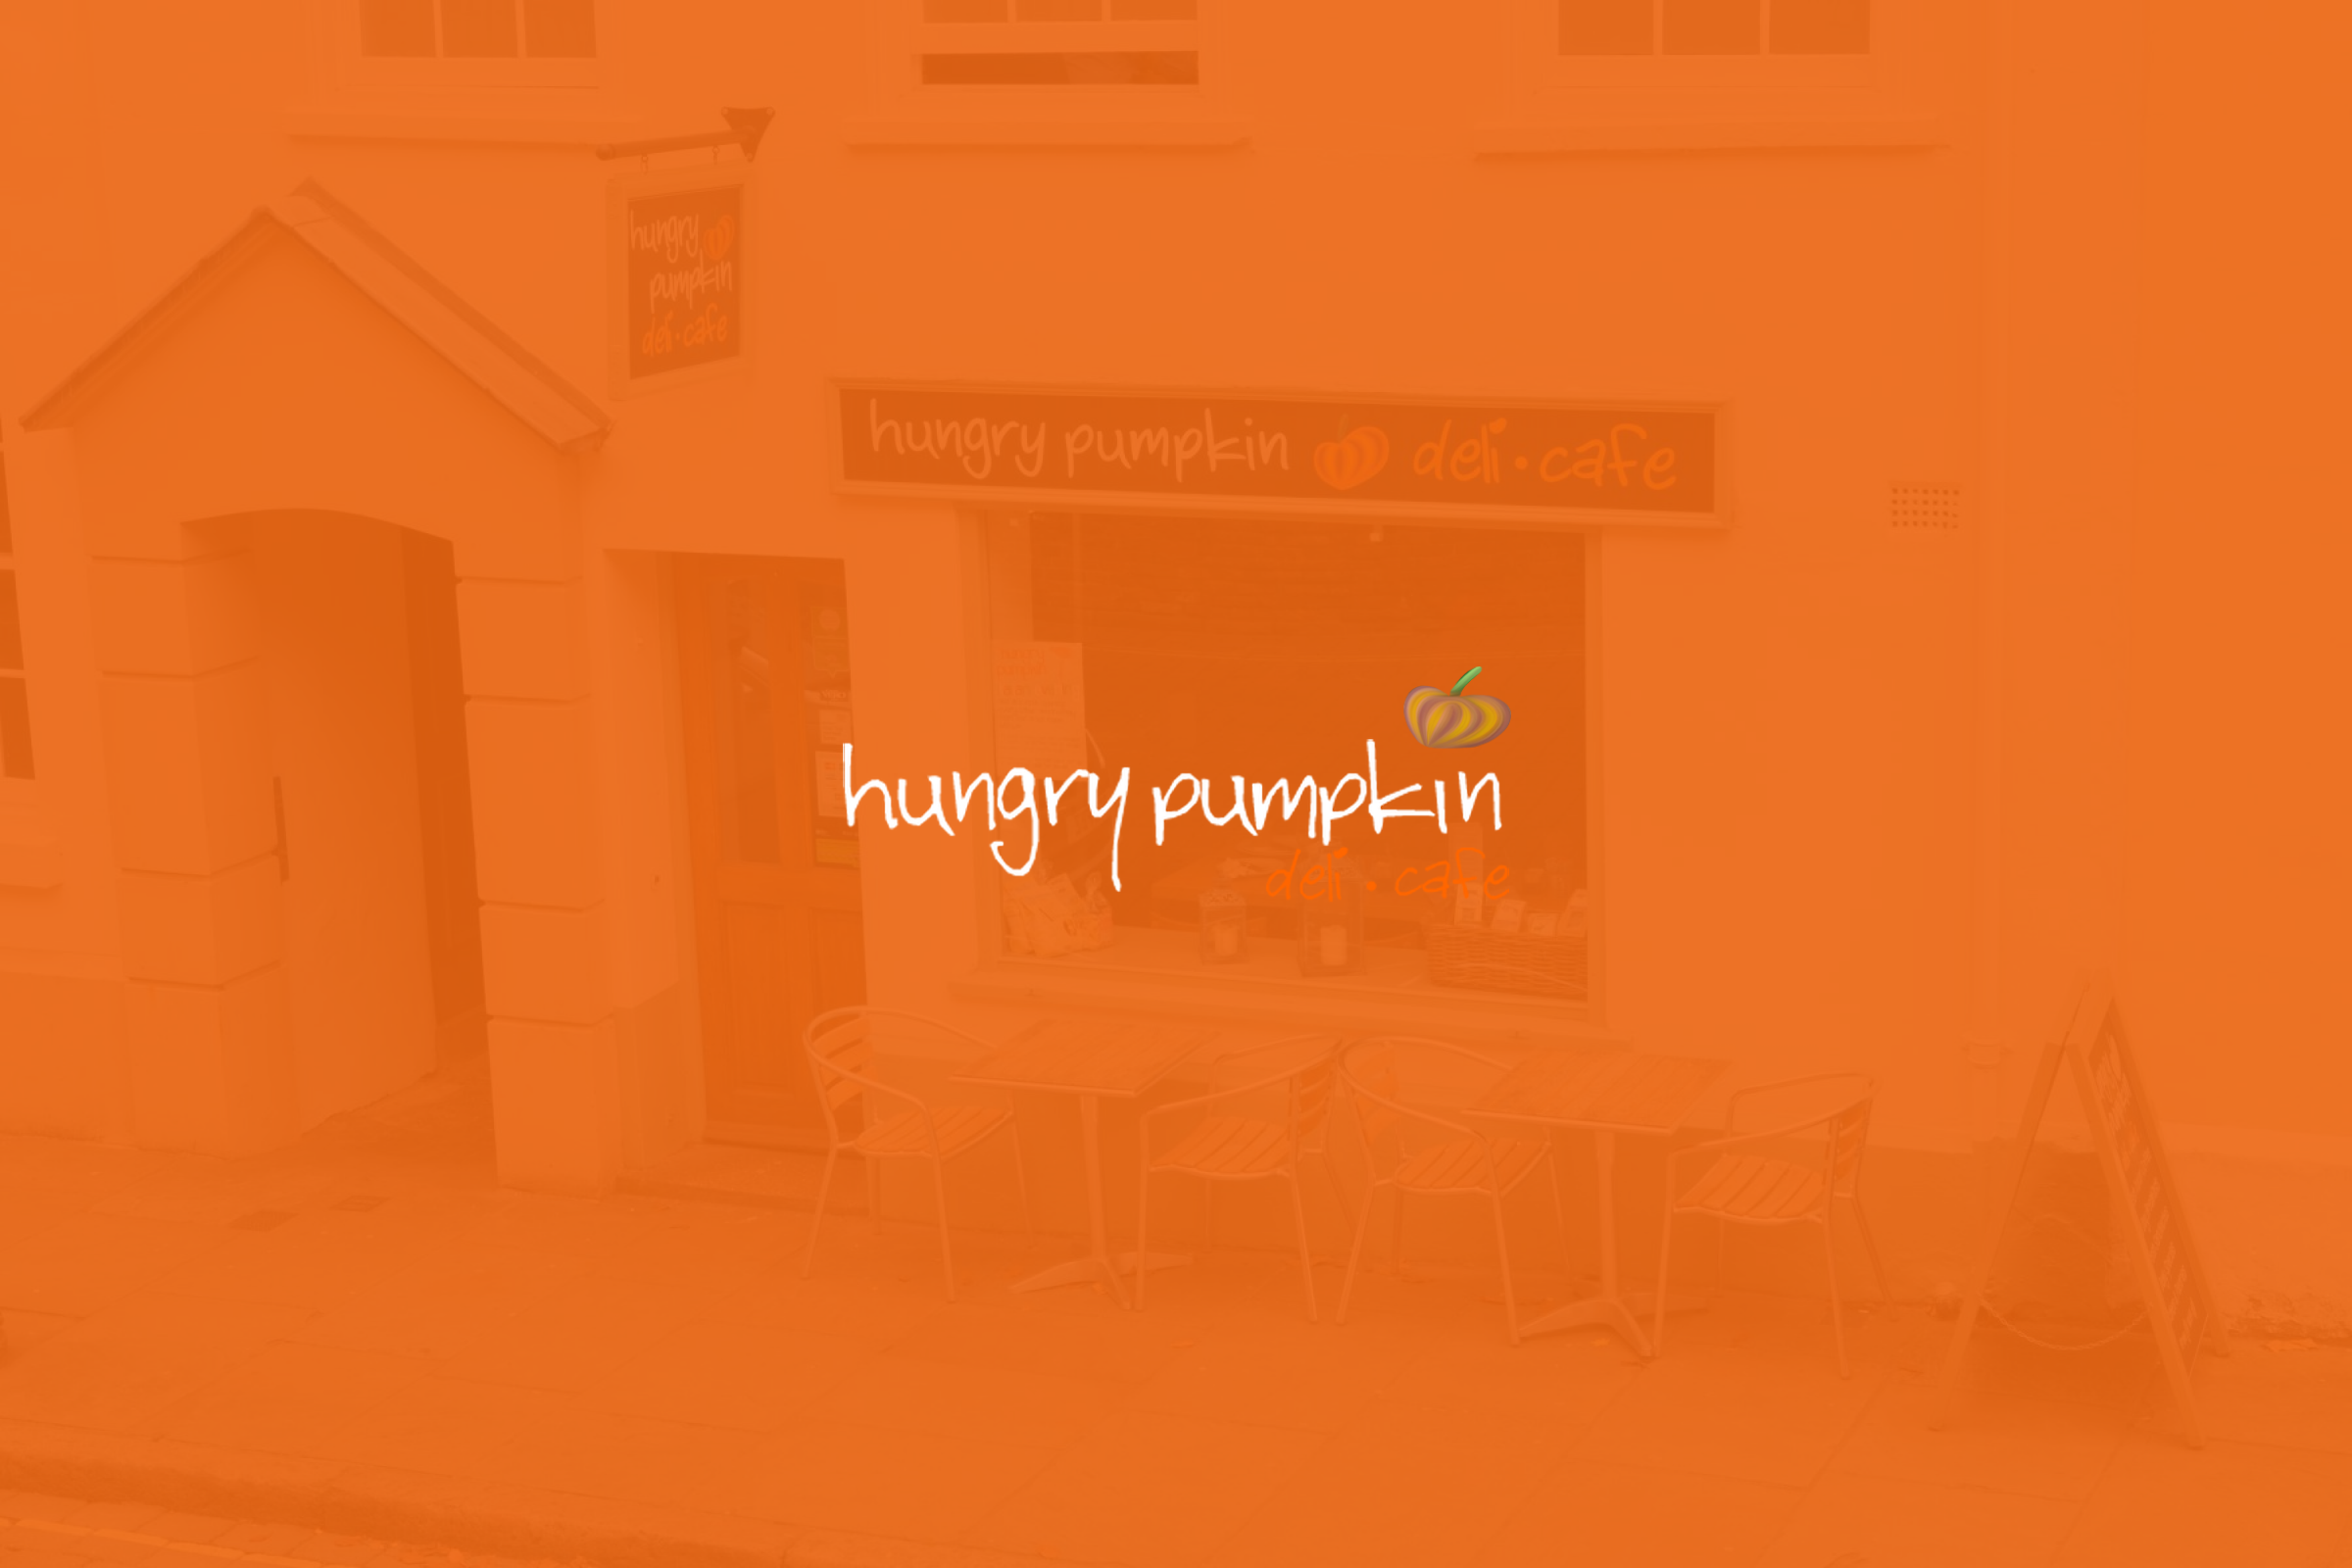 Hungry Pumpkin deli in Nottingham